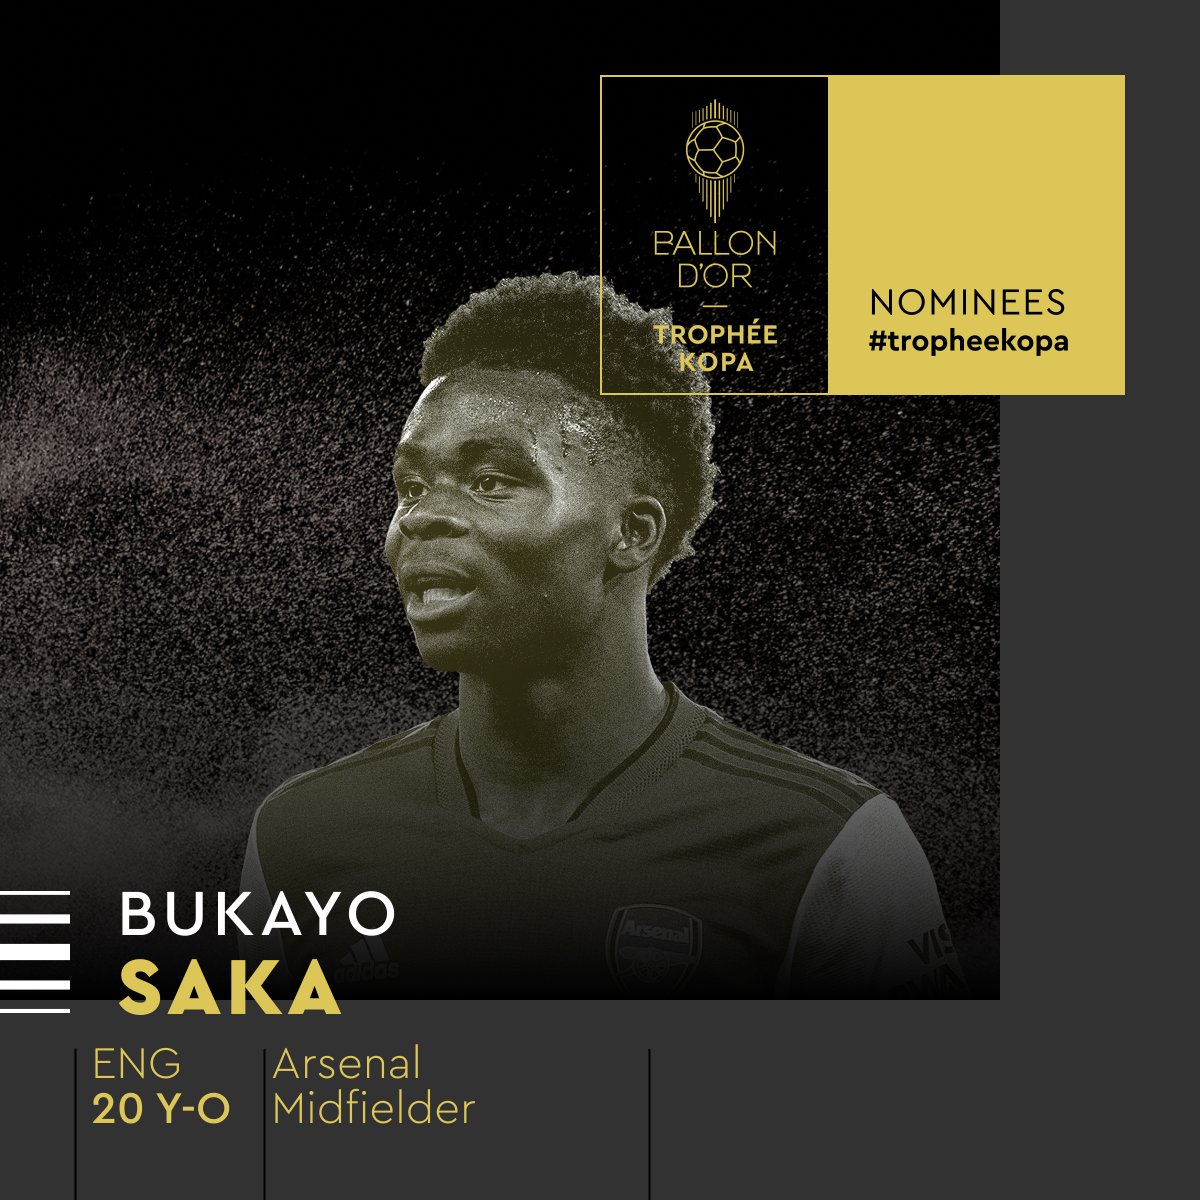 Nominated for the 2022 Kopa Trophy… ✨

@BukayoSaka87
@Arsenal

#TropheeKopa #ballondor